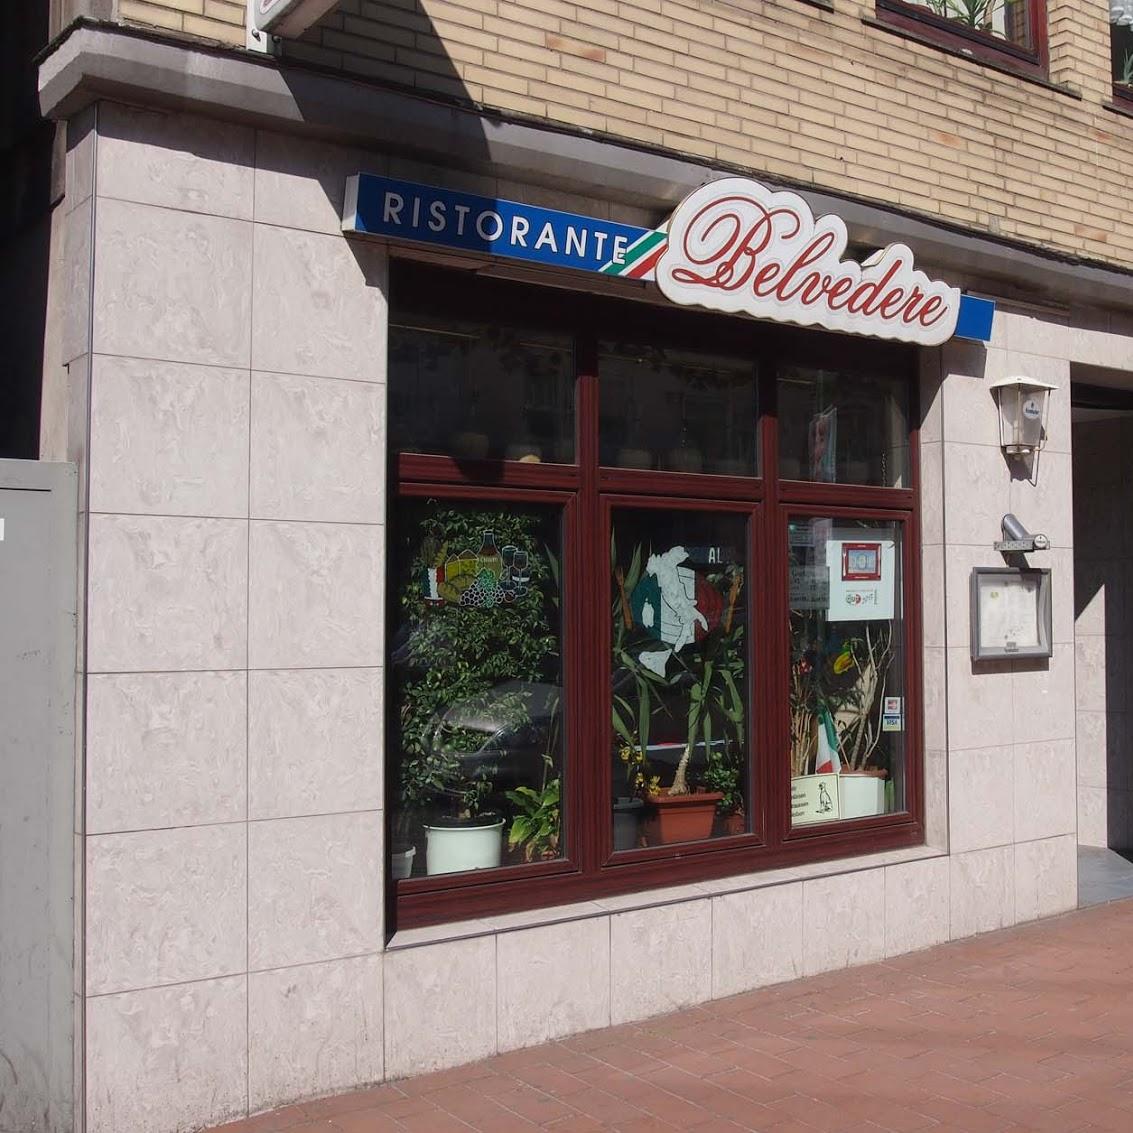 Restaurant "Ristorante Belvedere" in Bremerhaven